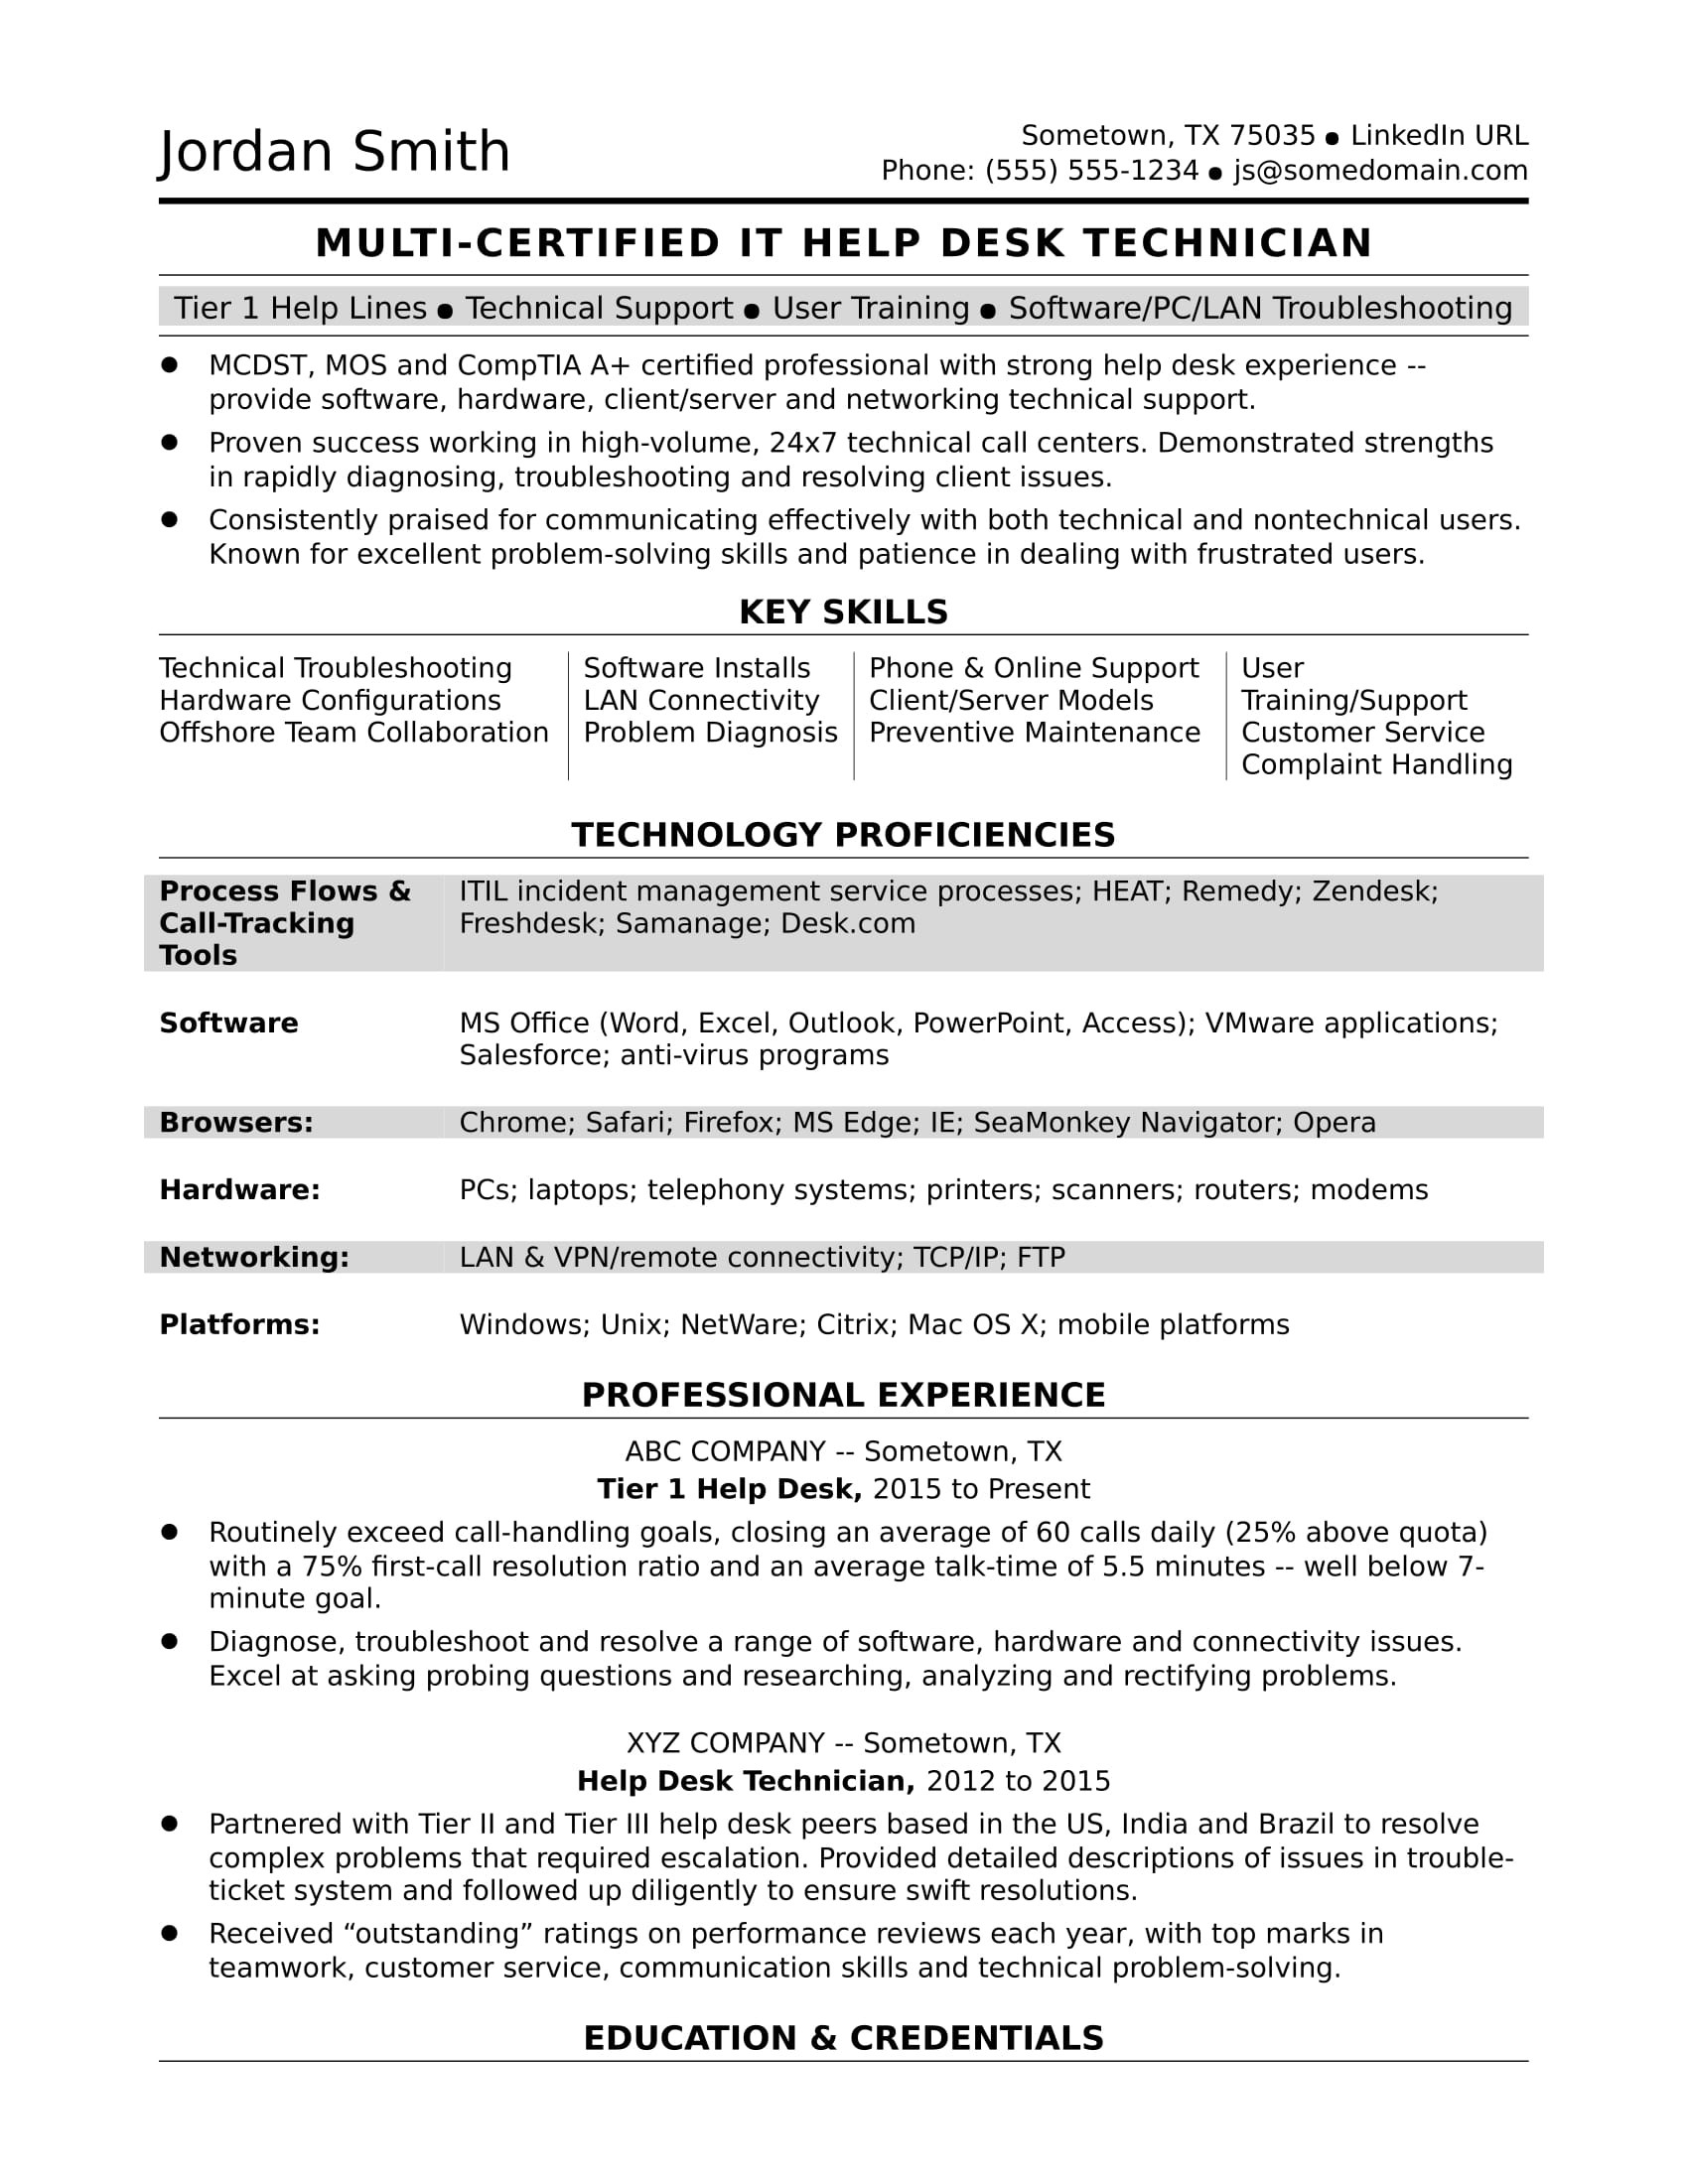 Tier 1 Technical Support Resume Samples Sample Resume for A Midlevel It Help Desk Professional Monster.com